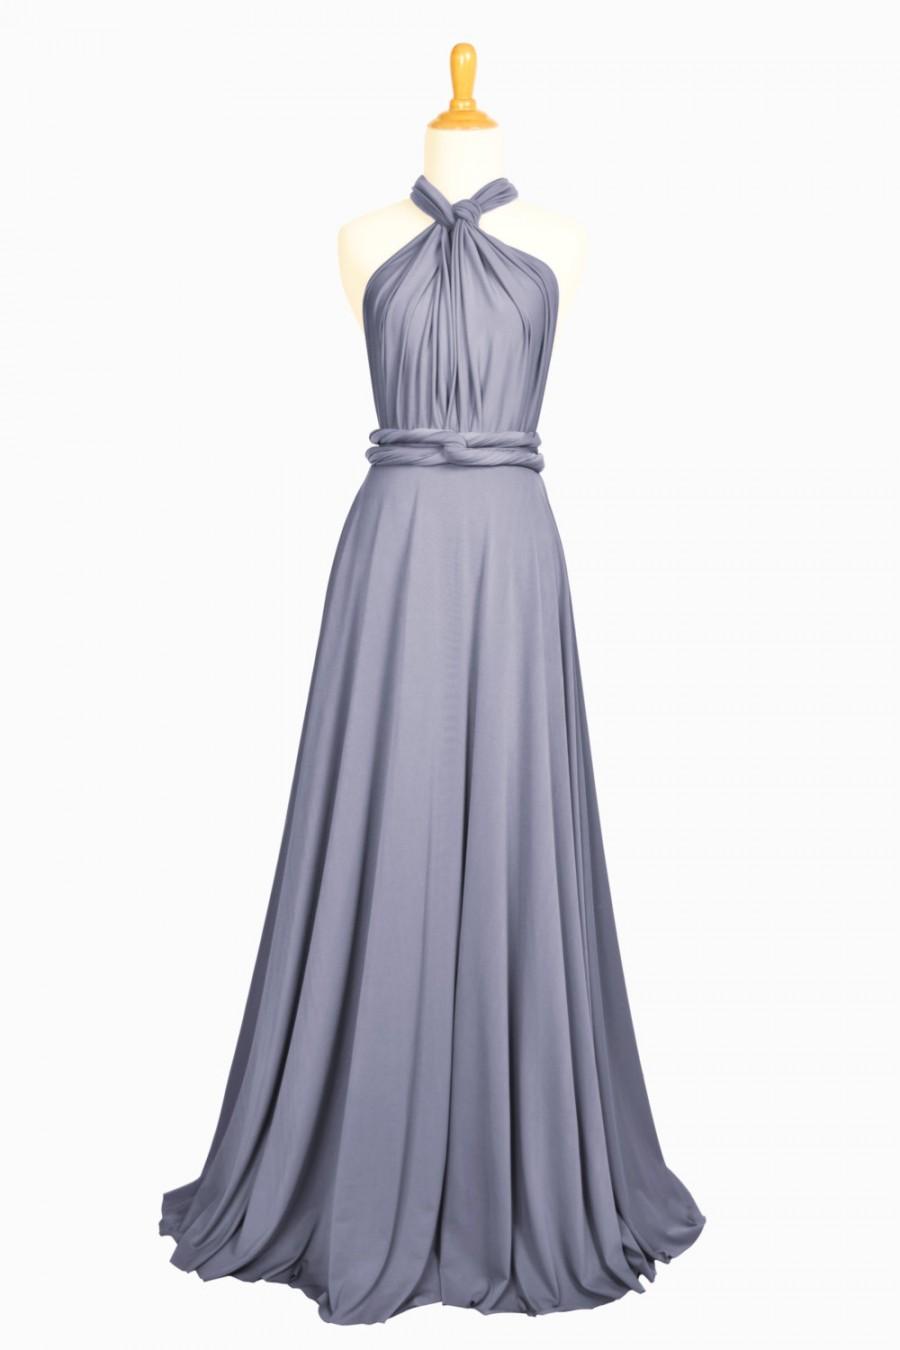 زفاف - Bridesmaid Dress  Lilac gray Infinity Dress  floor Length Wrap Convertible Dress L119